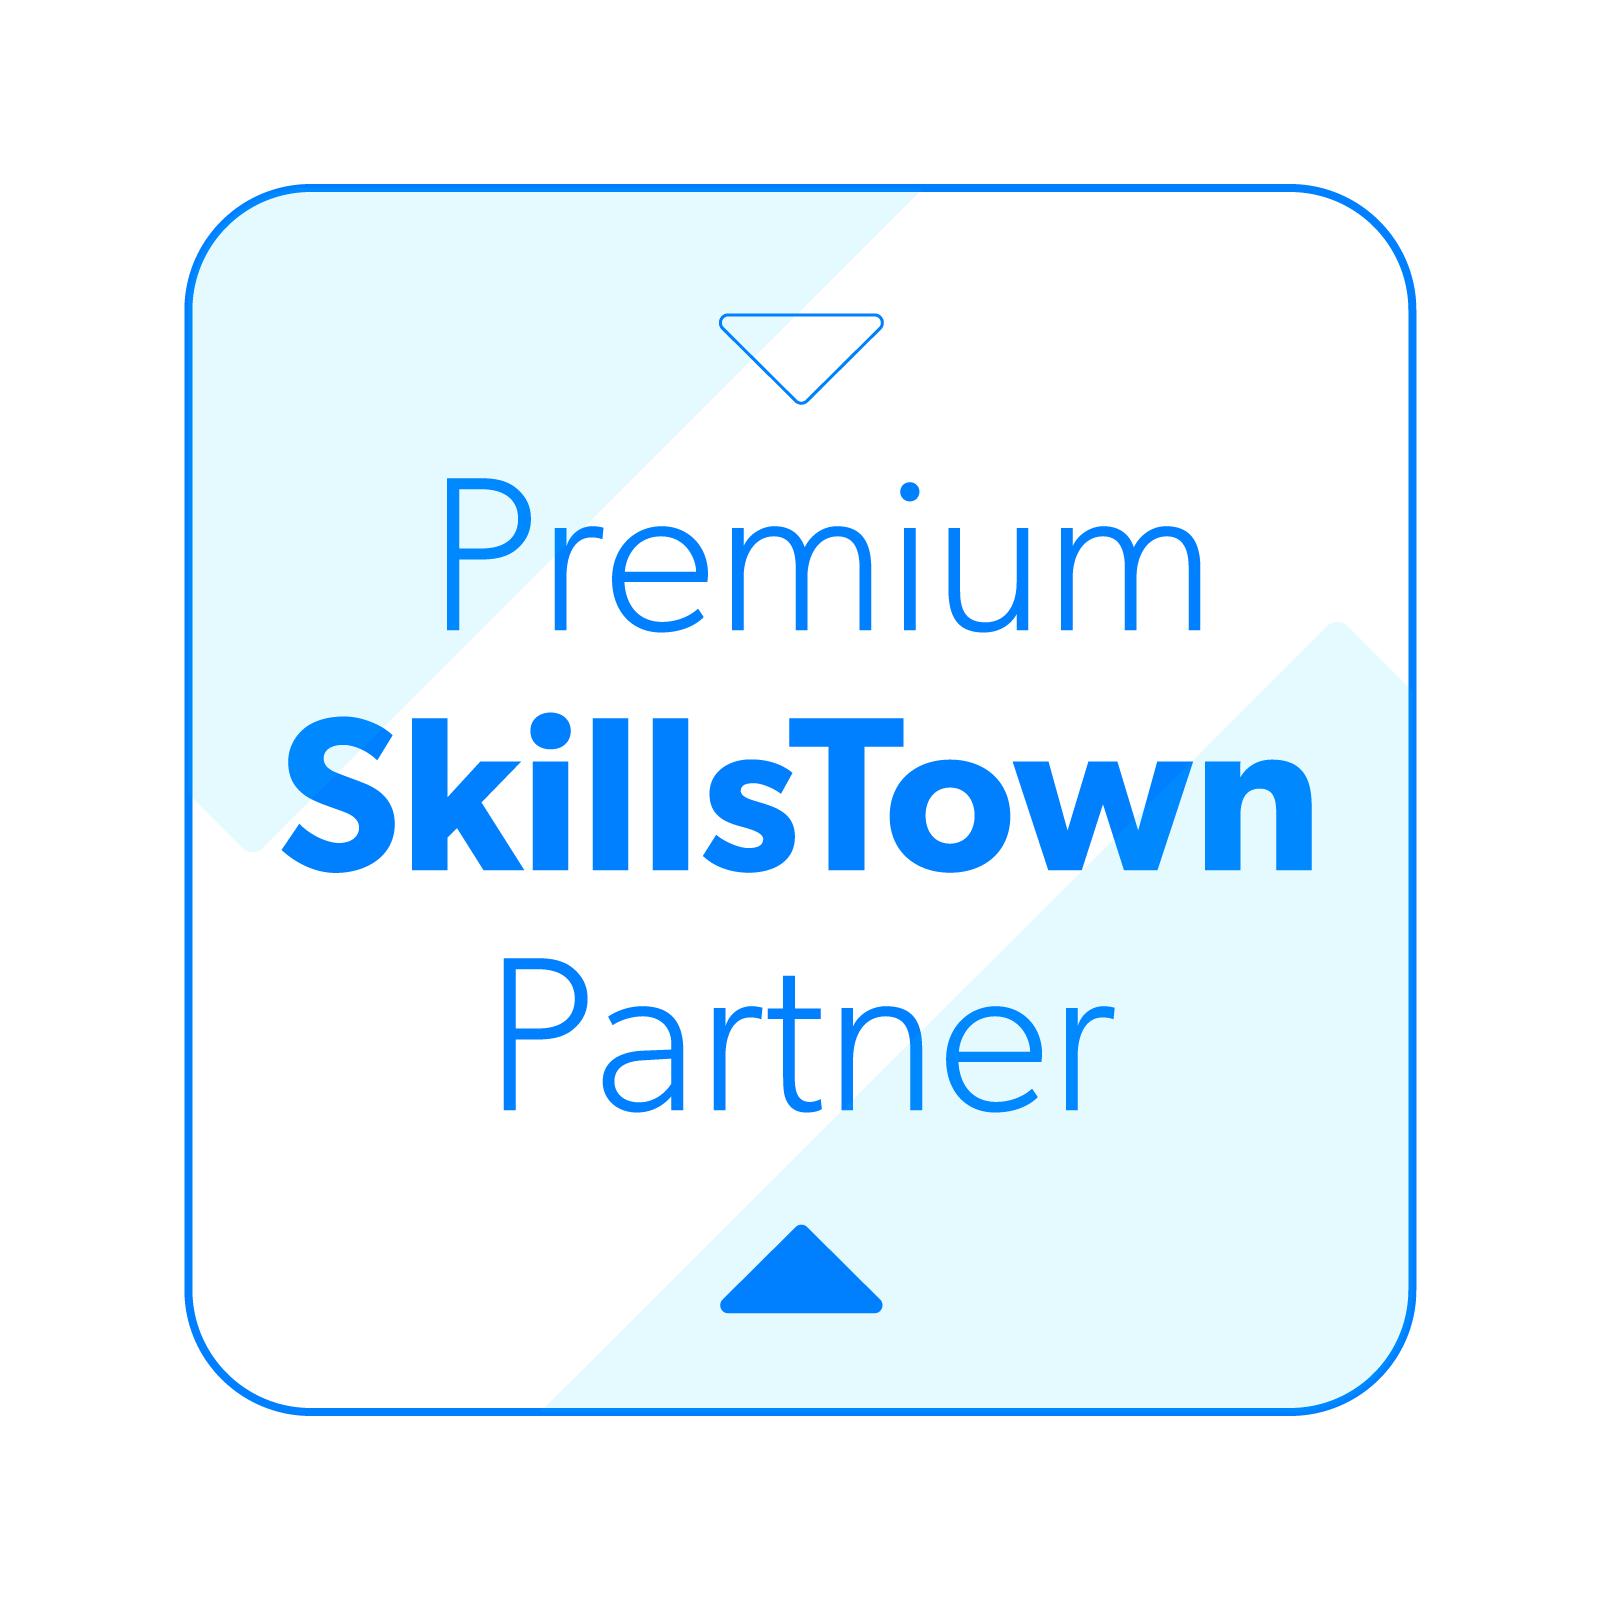 Premium SkillsTown Partner